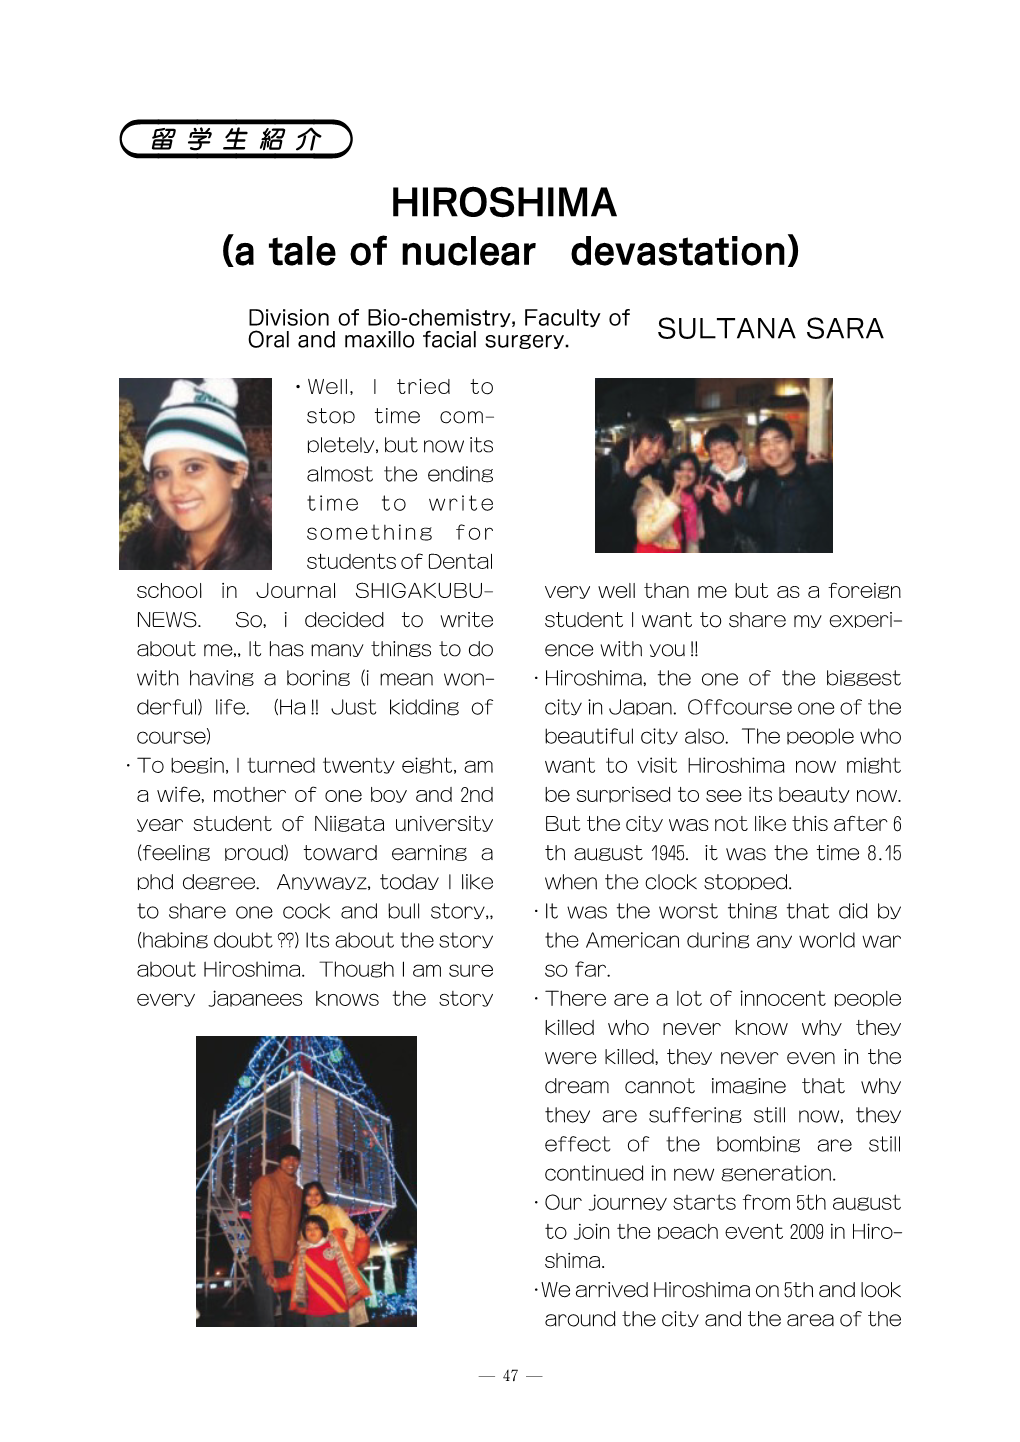 HIROSHIMA (A Tale of Nuclear Devastation)